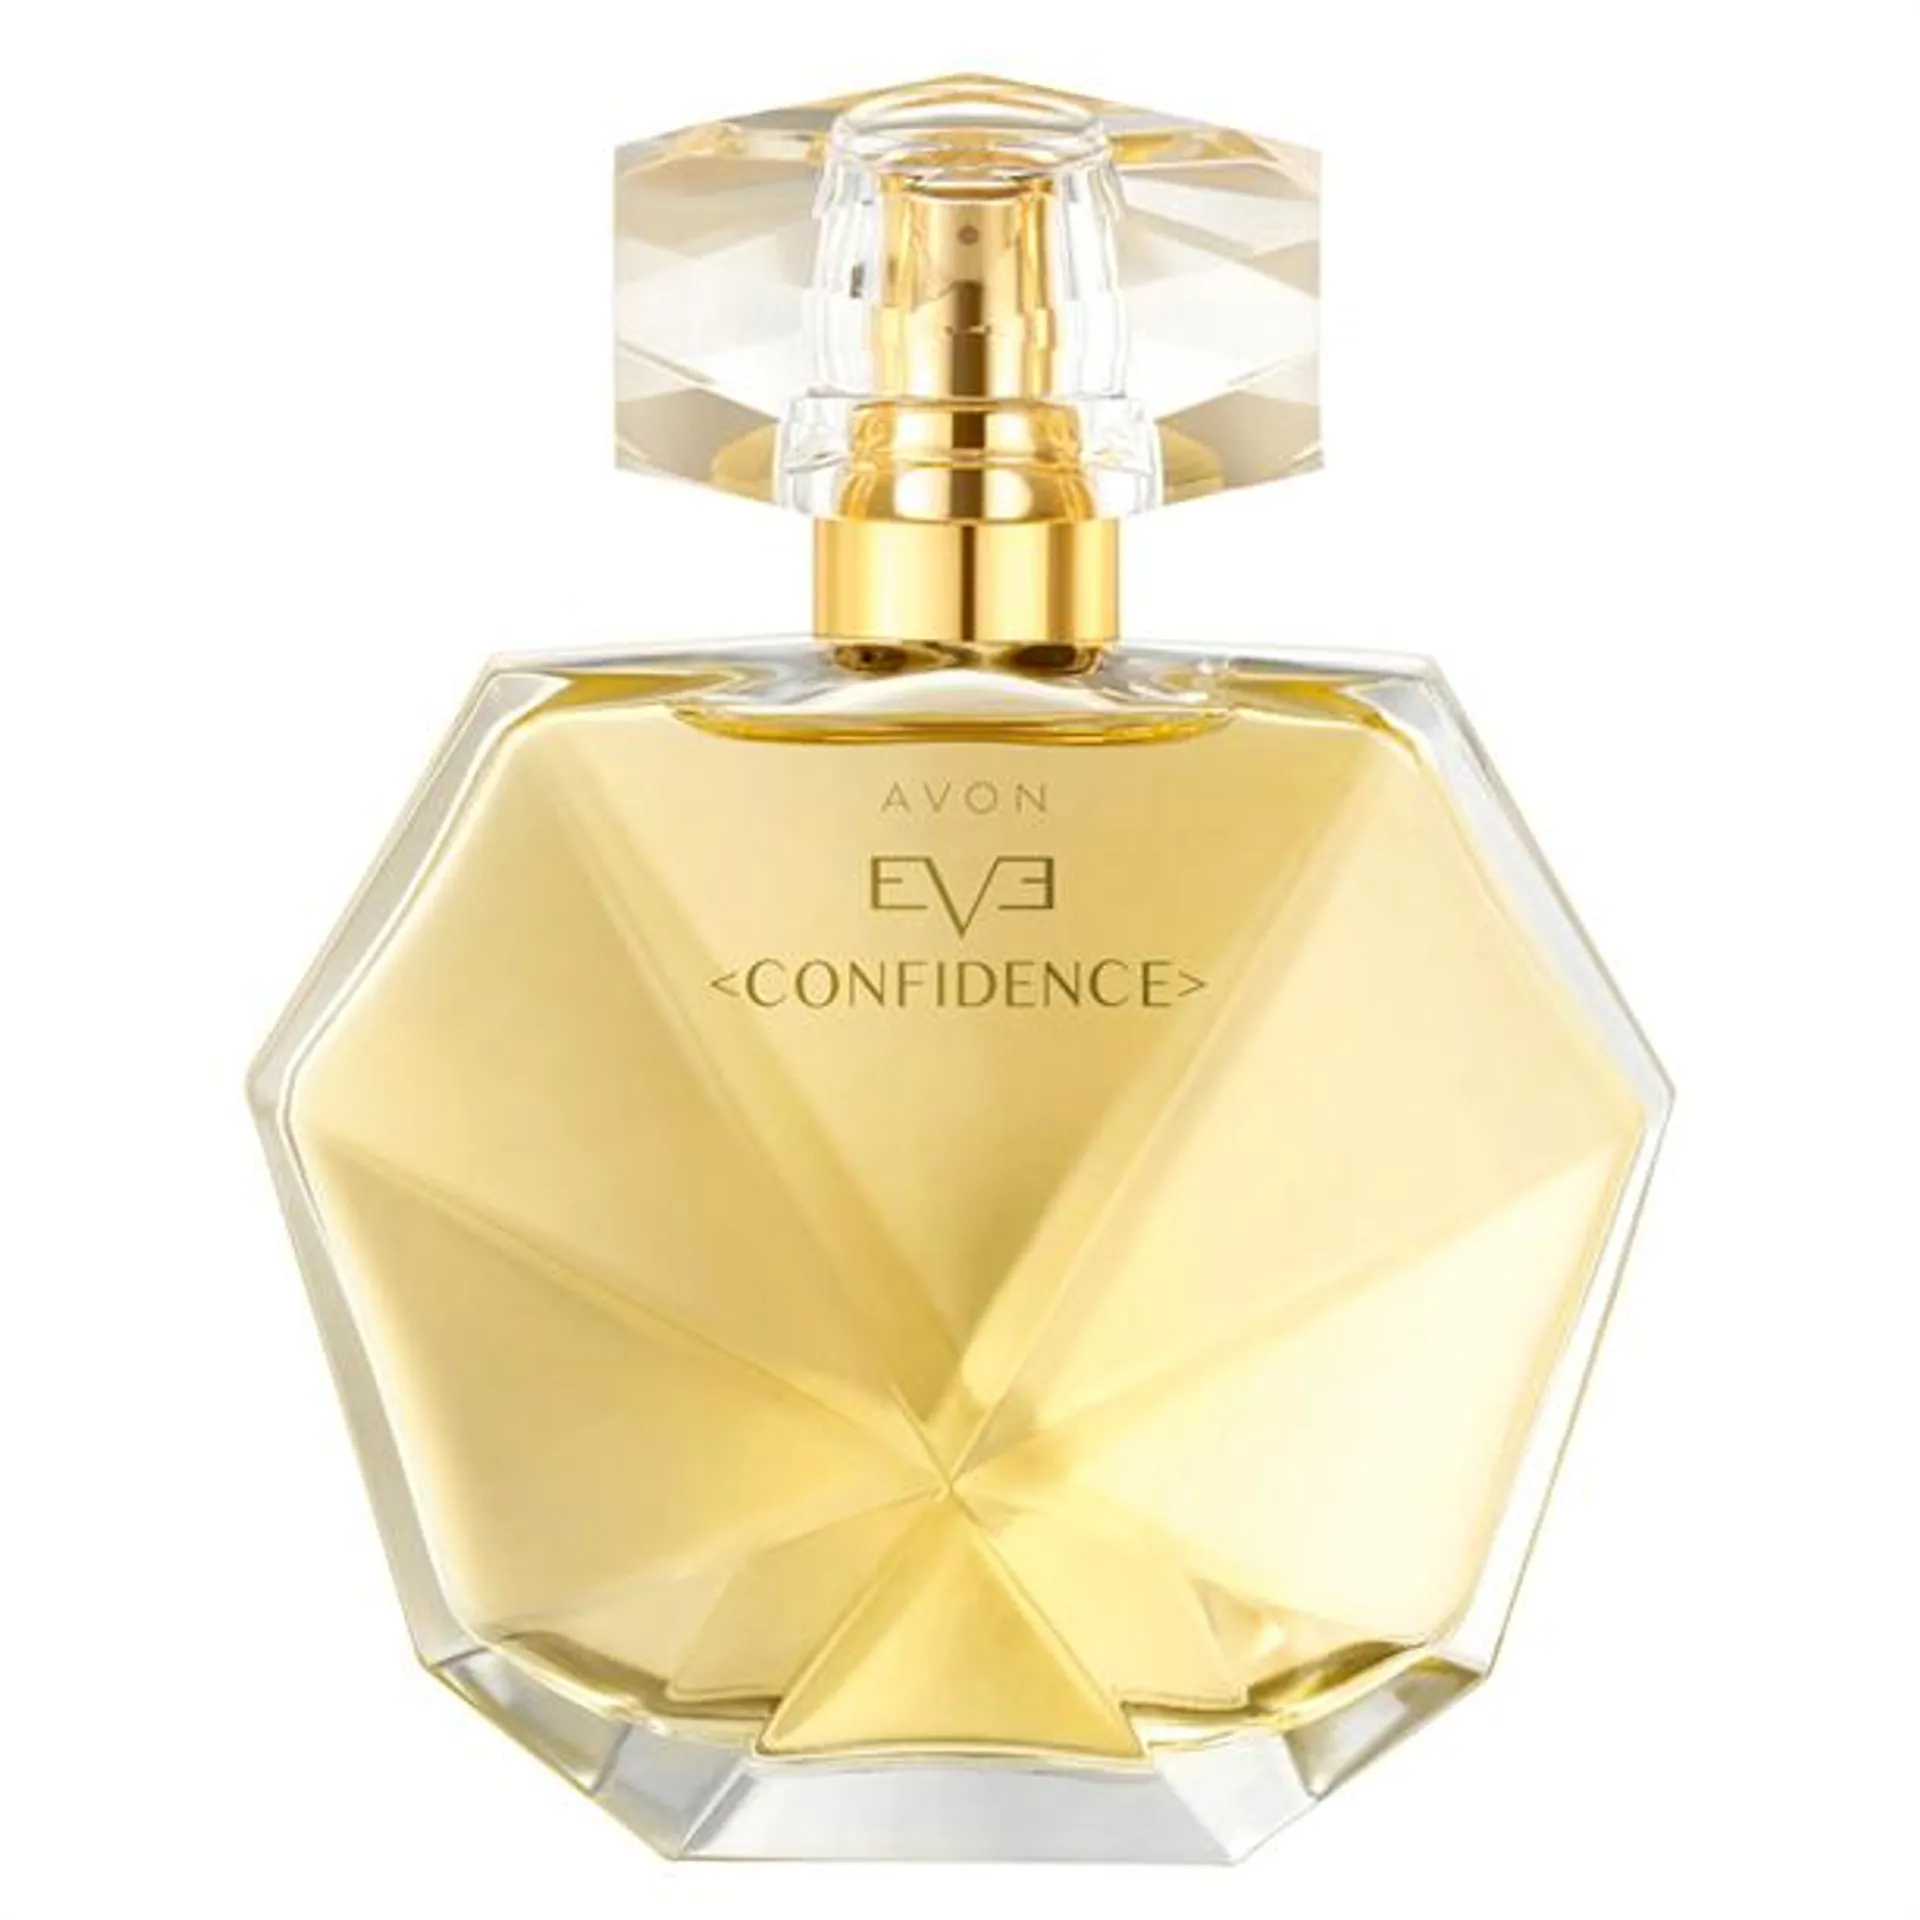 Avon Eve Confidence Eau de Parfum en Spray